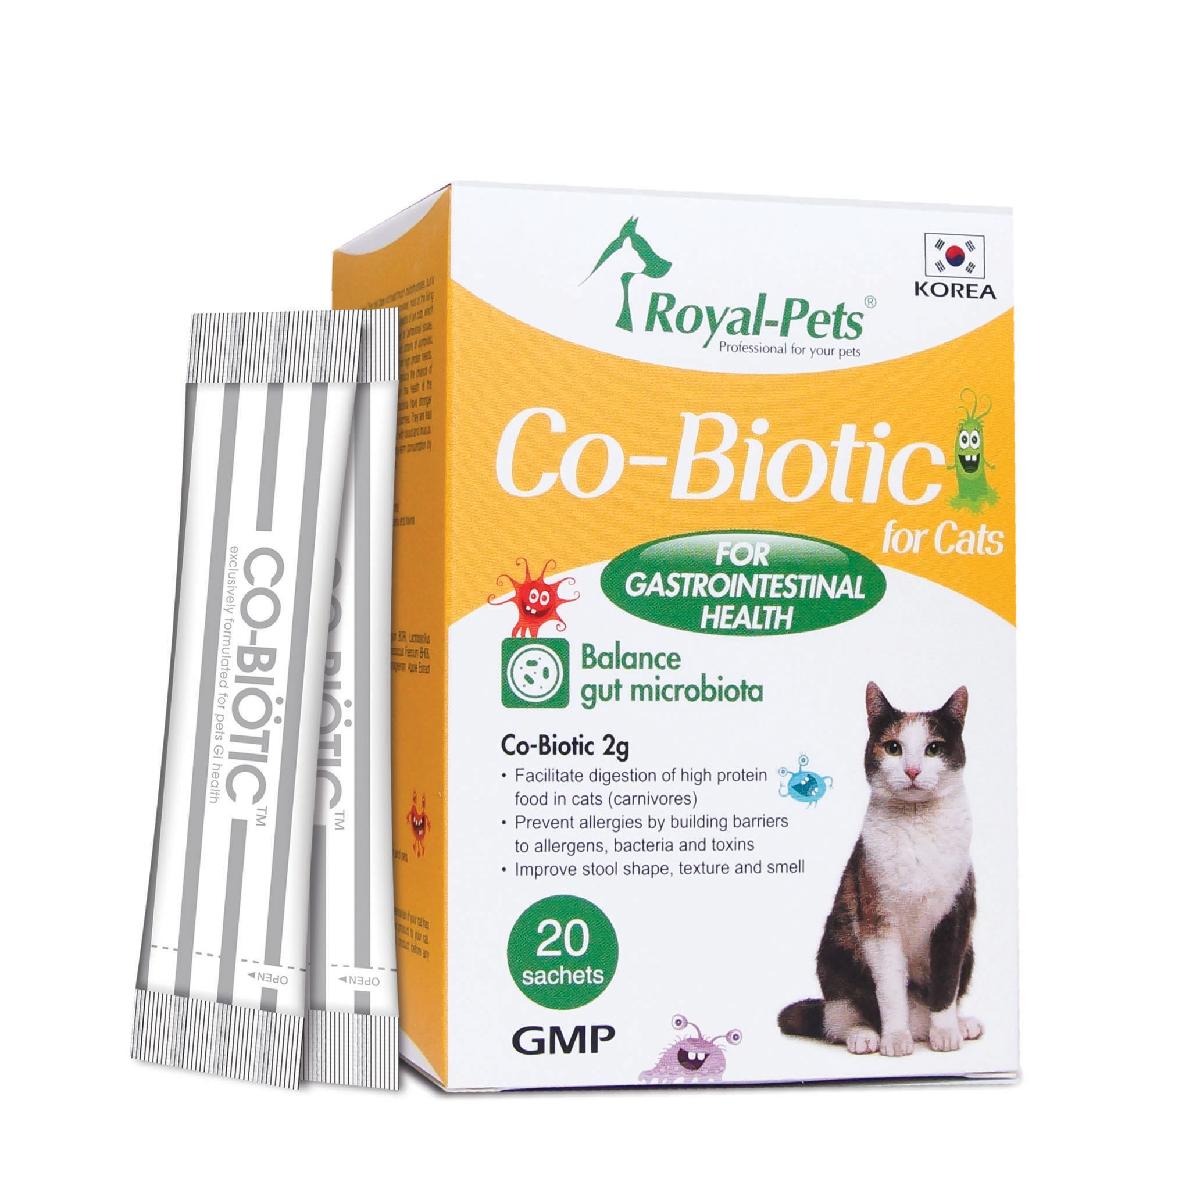 Co-Biotic for Cats 20 sachets 貓用腸胃益生素 20小包 送一盒 貓用腸胃益生素